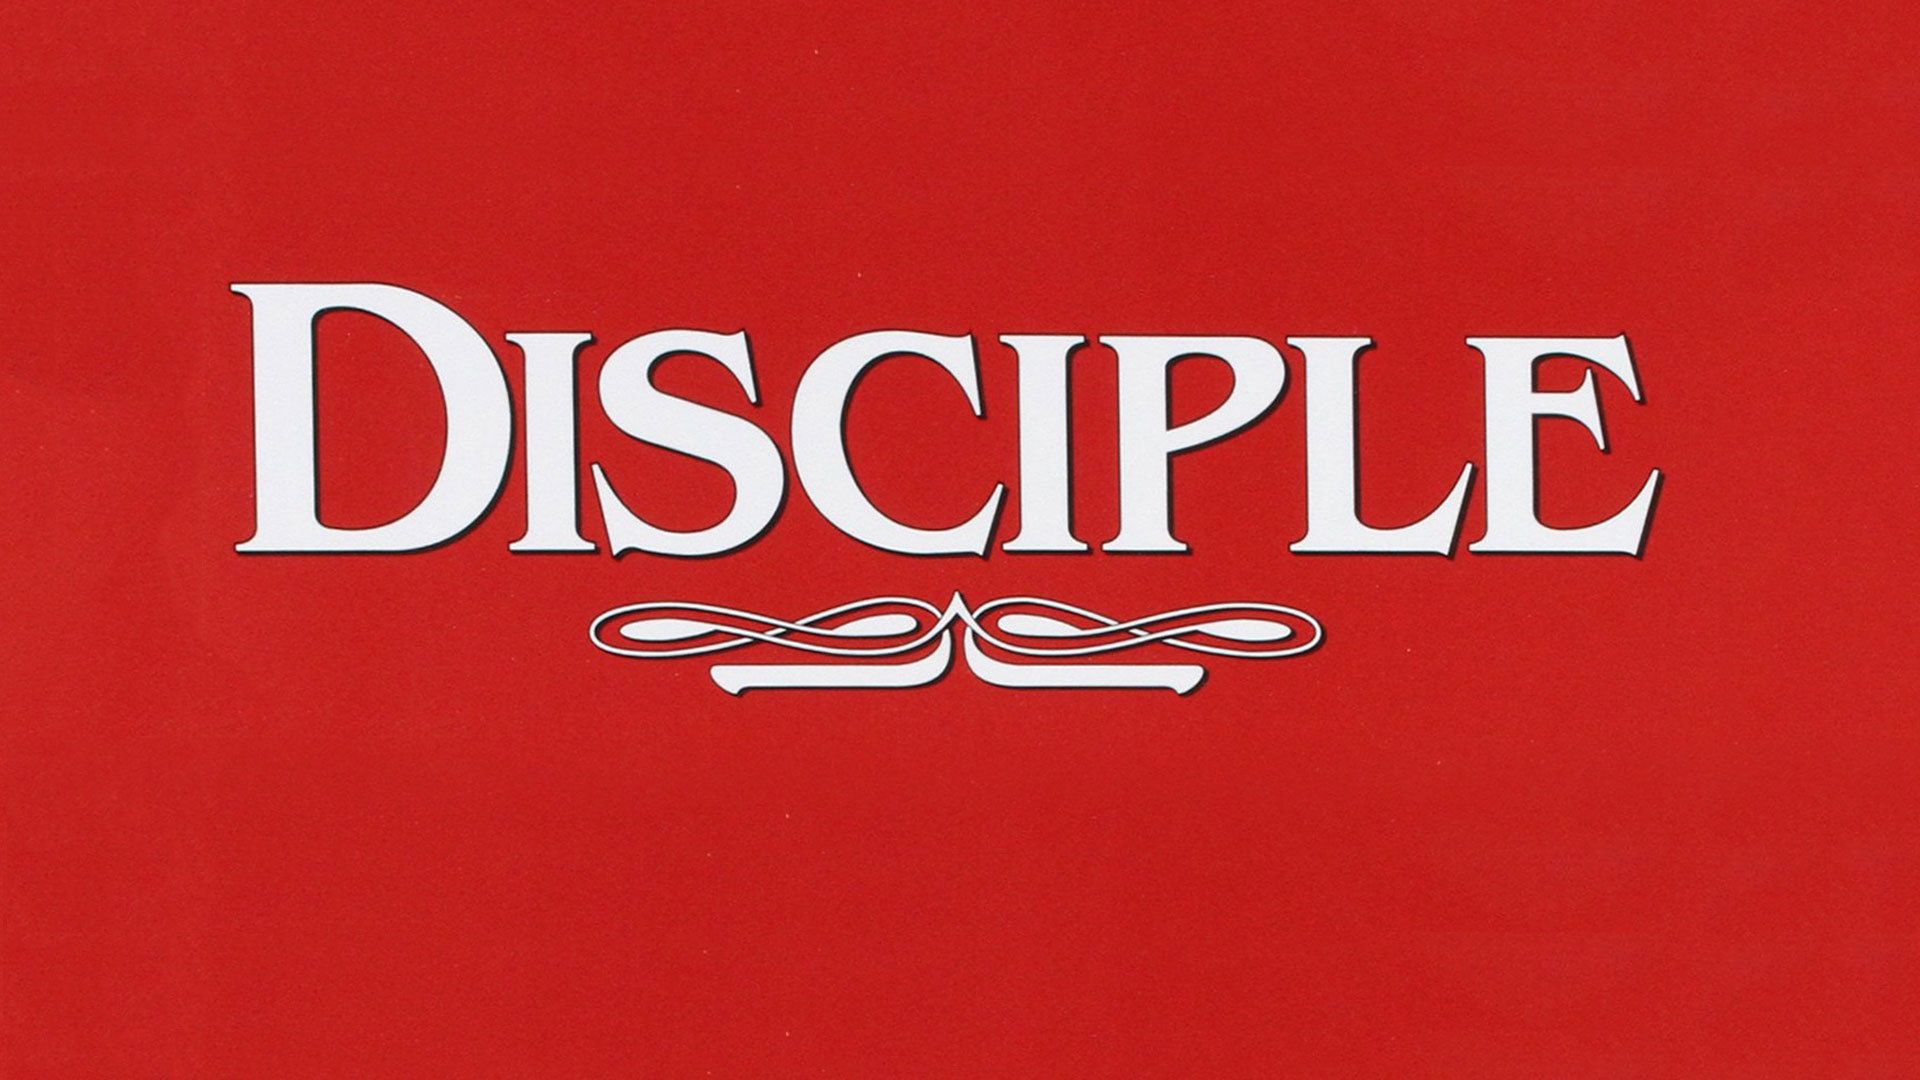 Disciple - 1920x1080